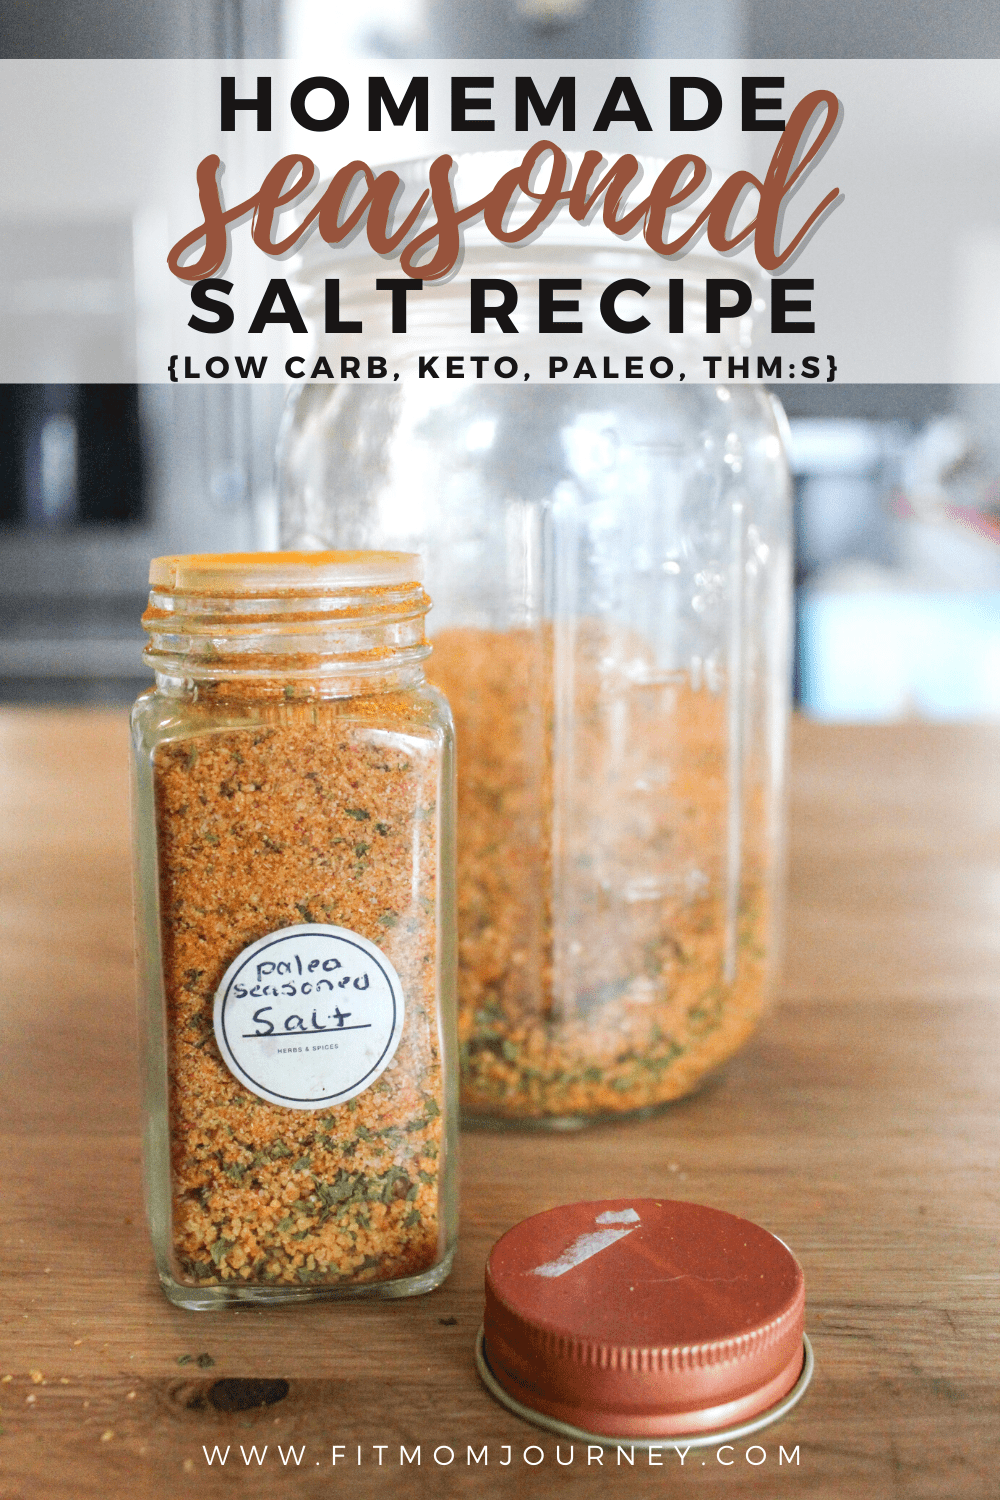 https://fitmomjourney.com/wp-content/uploads/2023/01/Homemade-Seasoned-Salt-Recipe-Pin-3-min.png